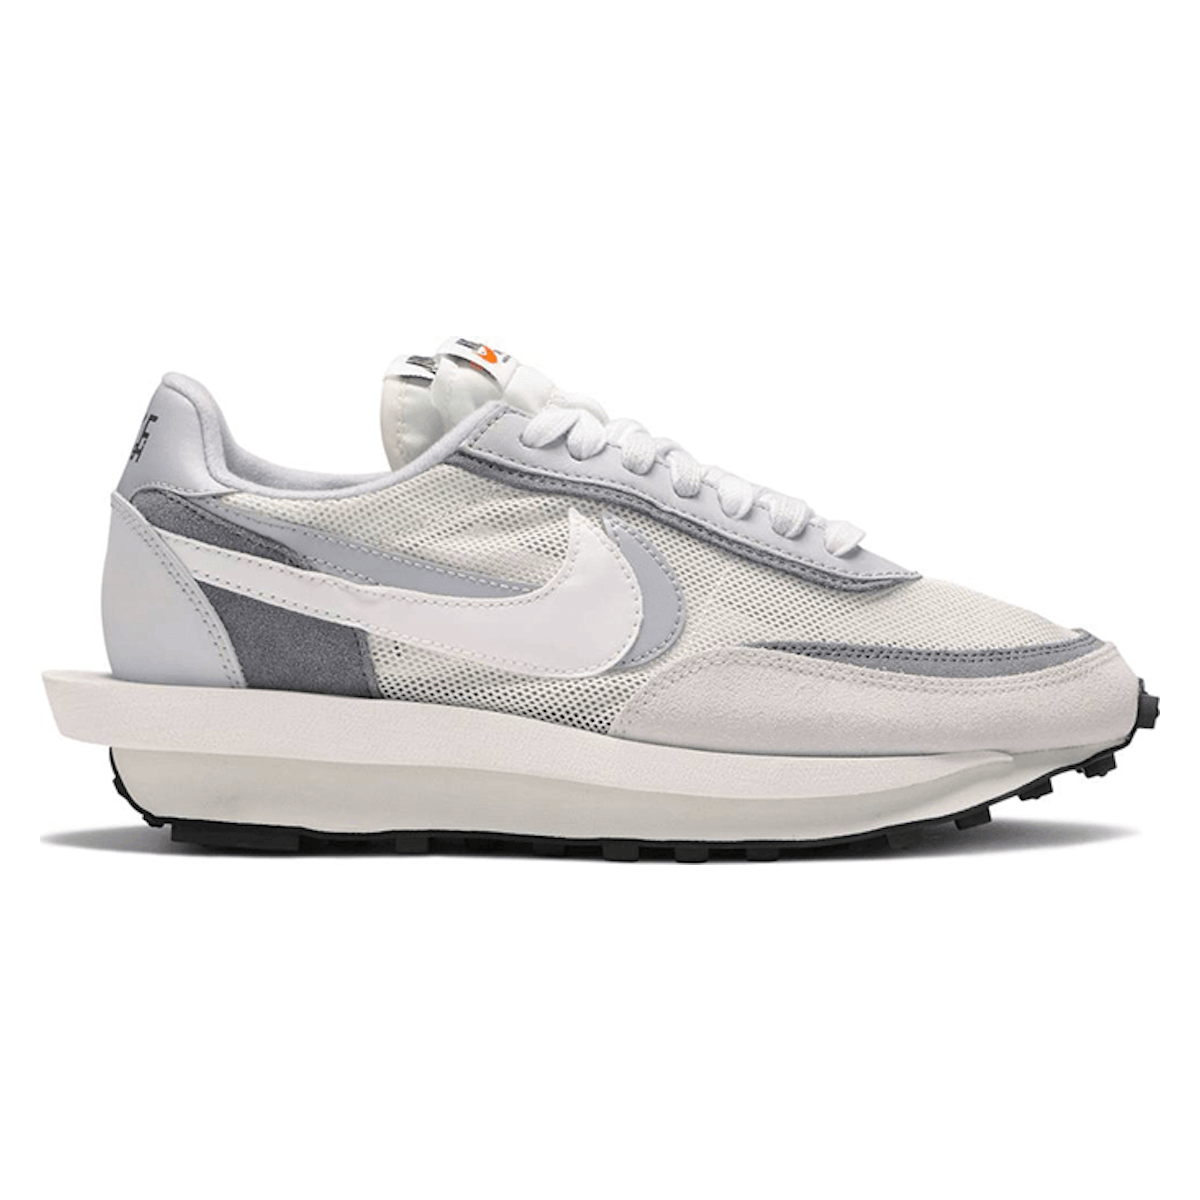 Sacai x Nike LDV Waffle "White Grey"